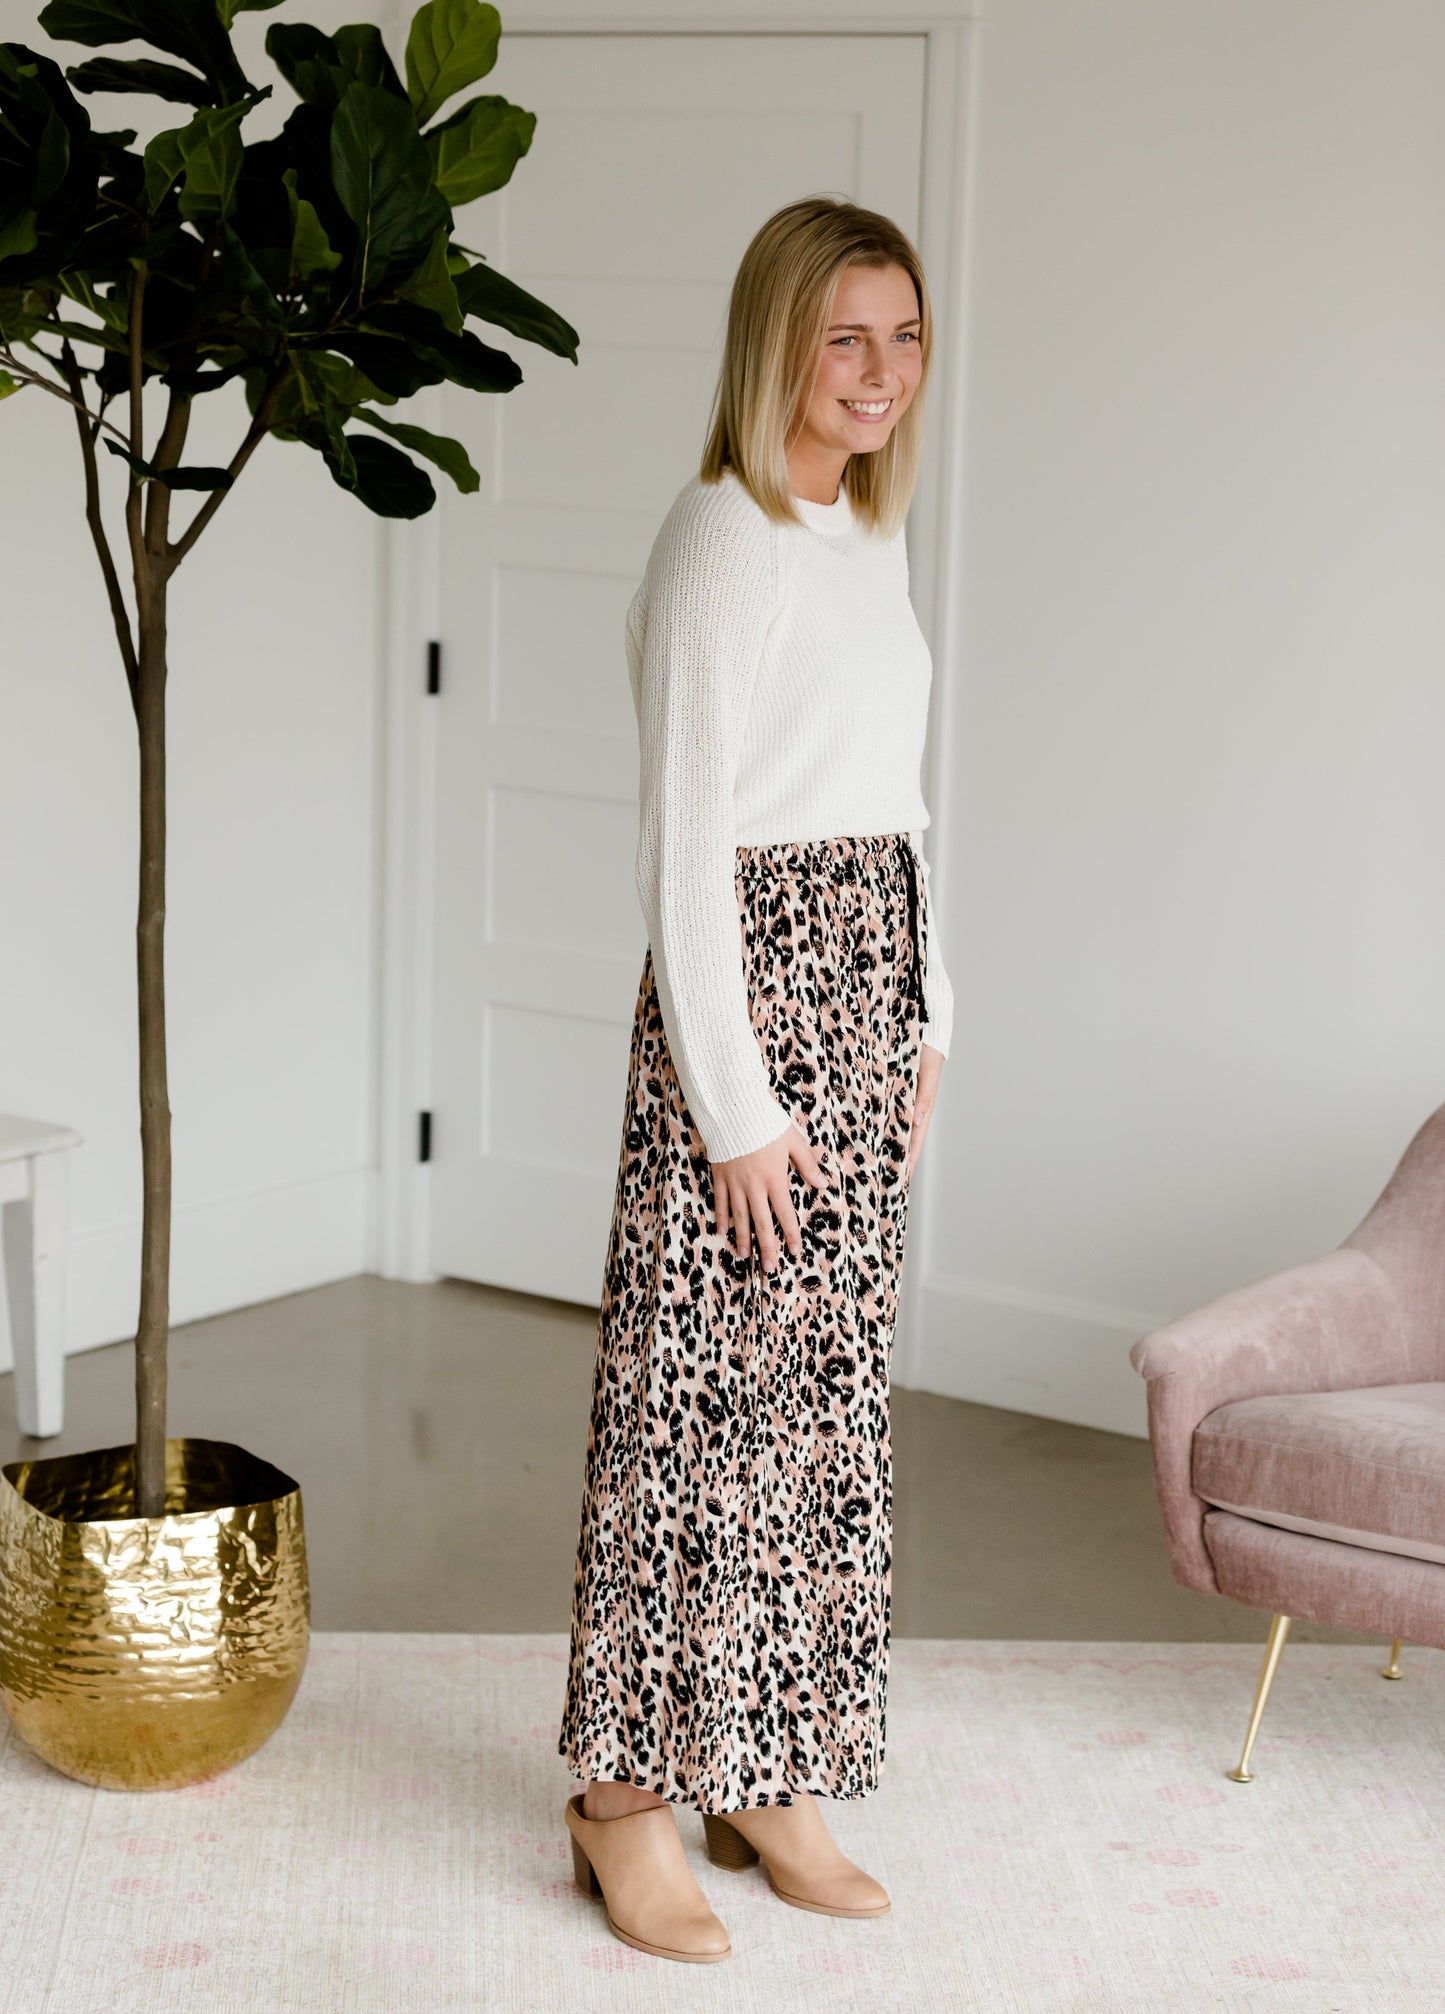 Leopard Print Maxi Skirt - FINAL SALE Skirts